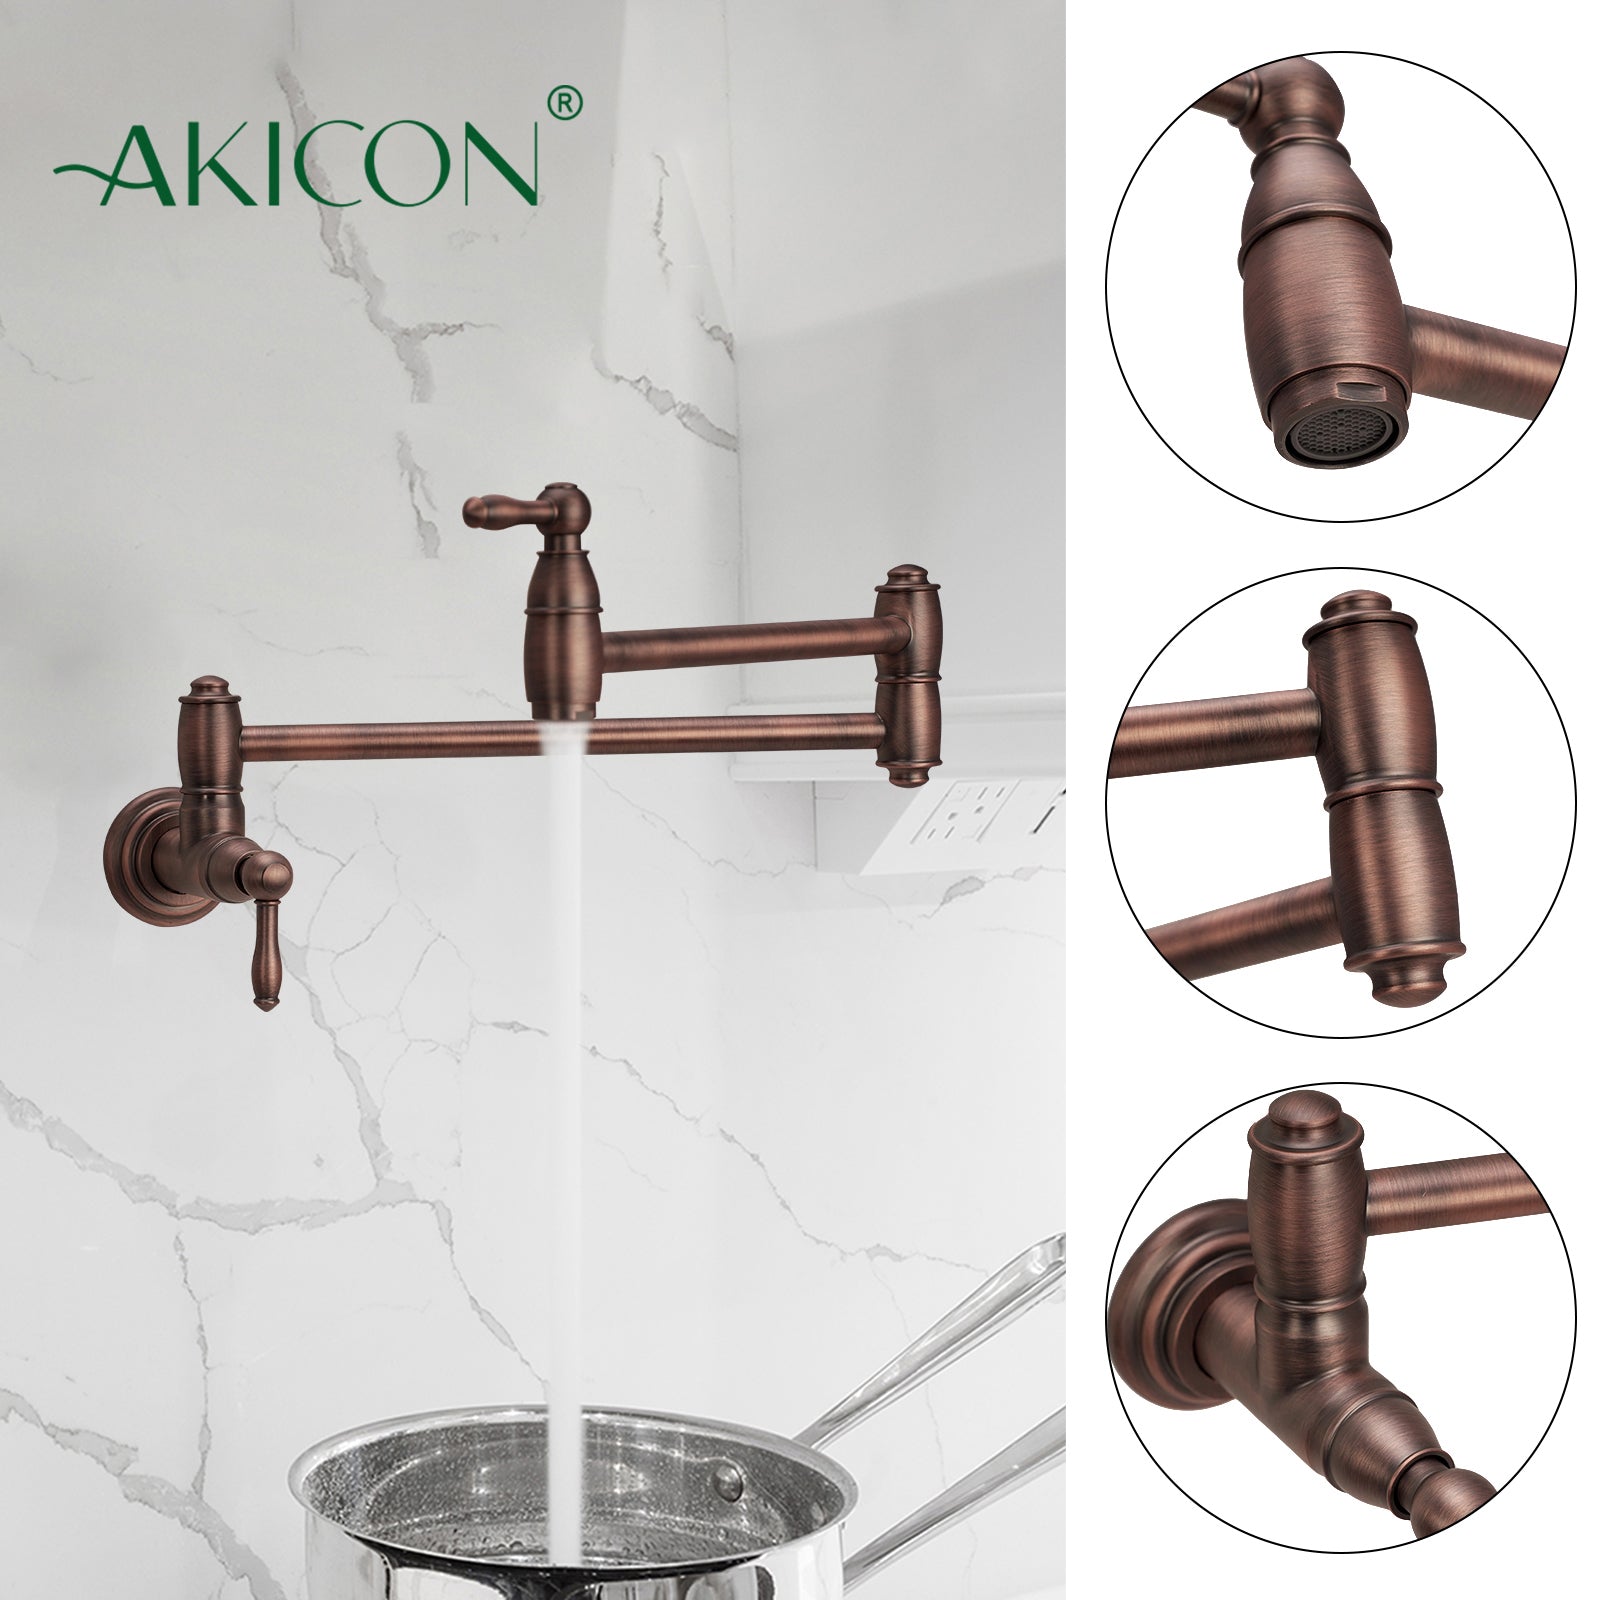 Copper Pot Filler Kitchen Faucet, Solid Brass Wall-Mounted Faucet - Antique Bronze